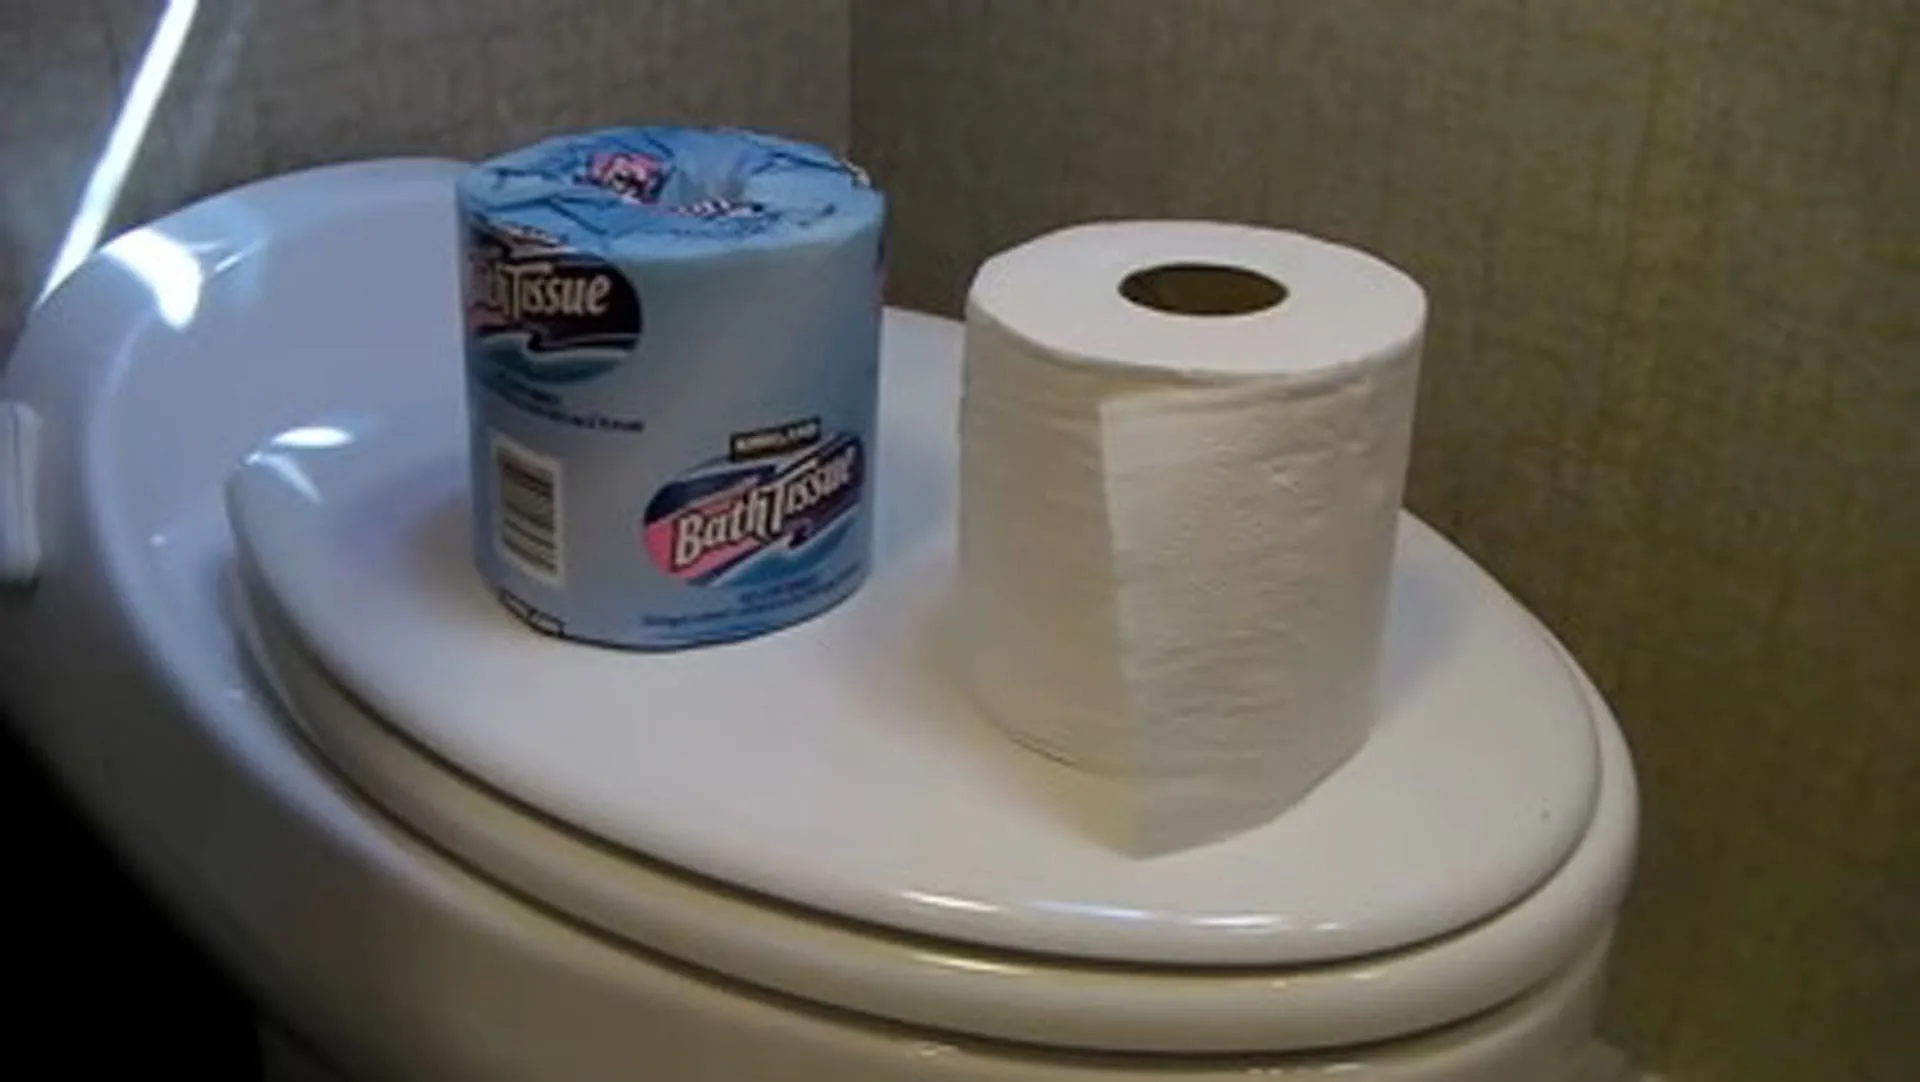 RV toilet paper vs regular toilet paper